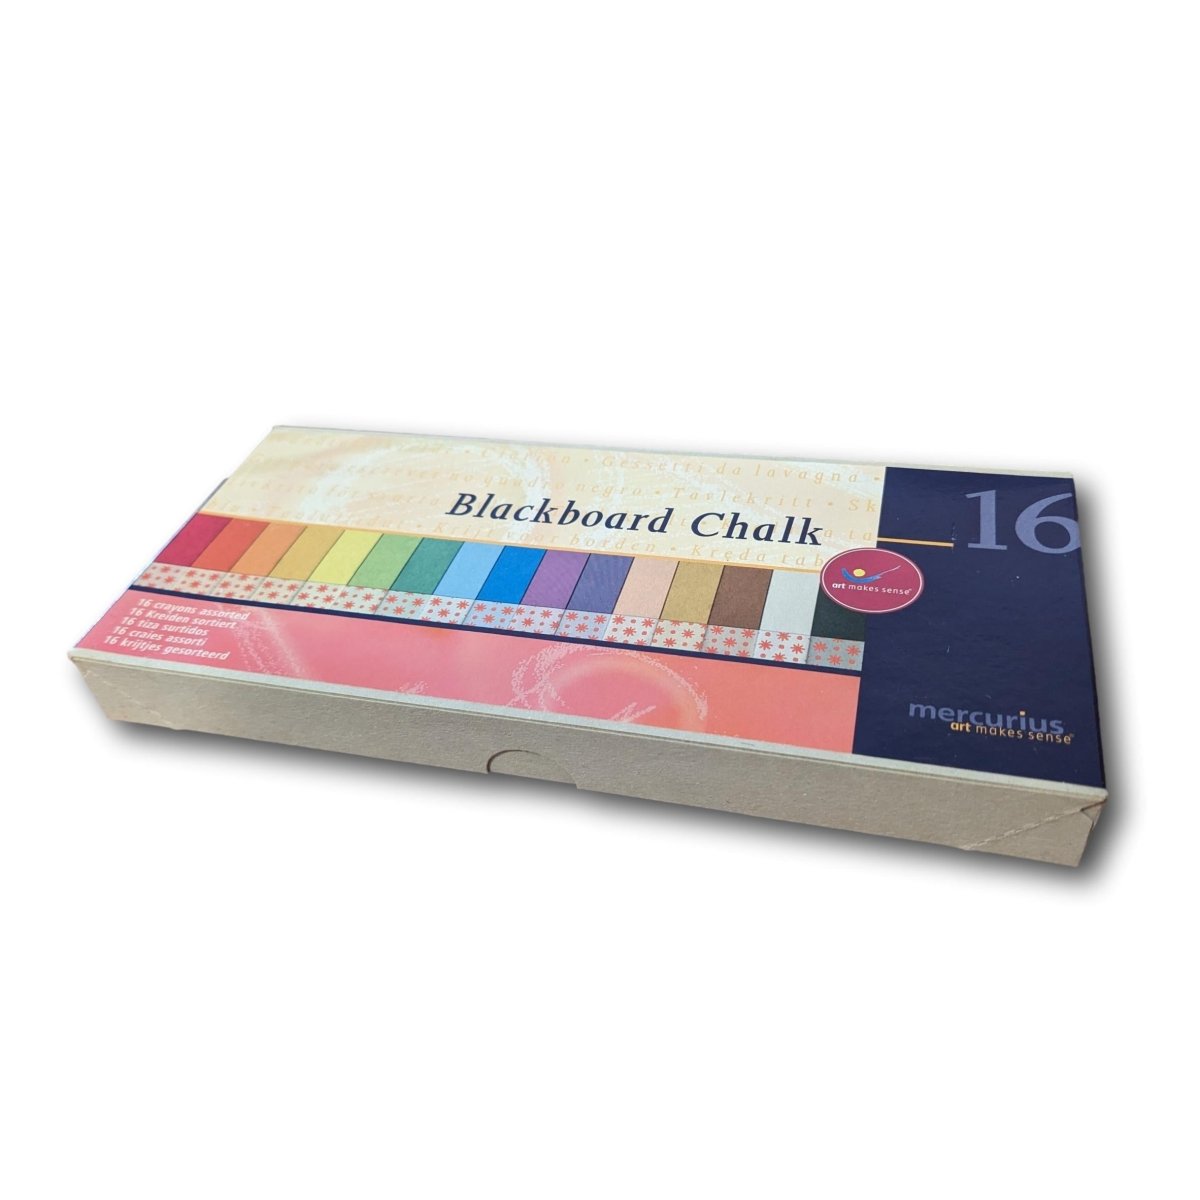 Blackboard Chalk - Pastel - Challenge & Fun, Inc.-MC20715200-1